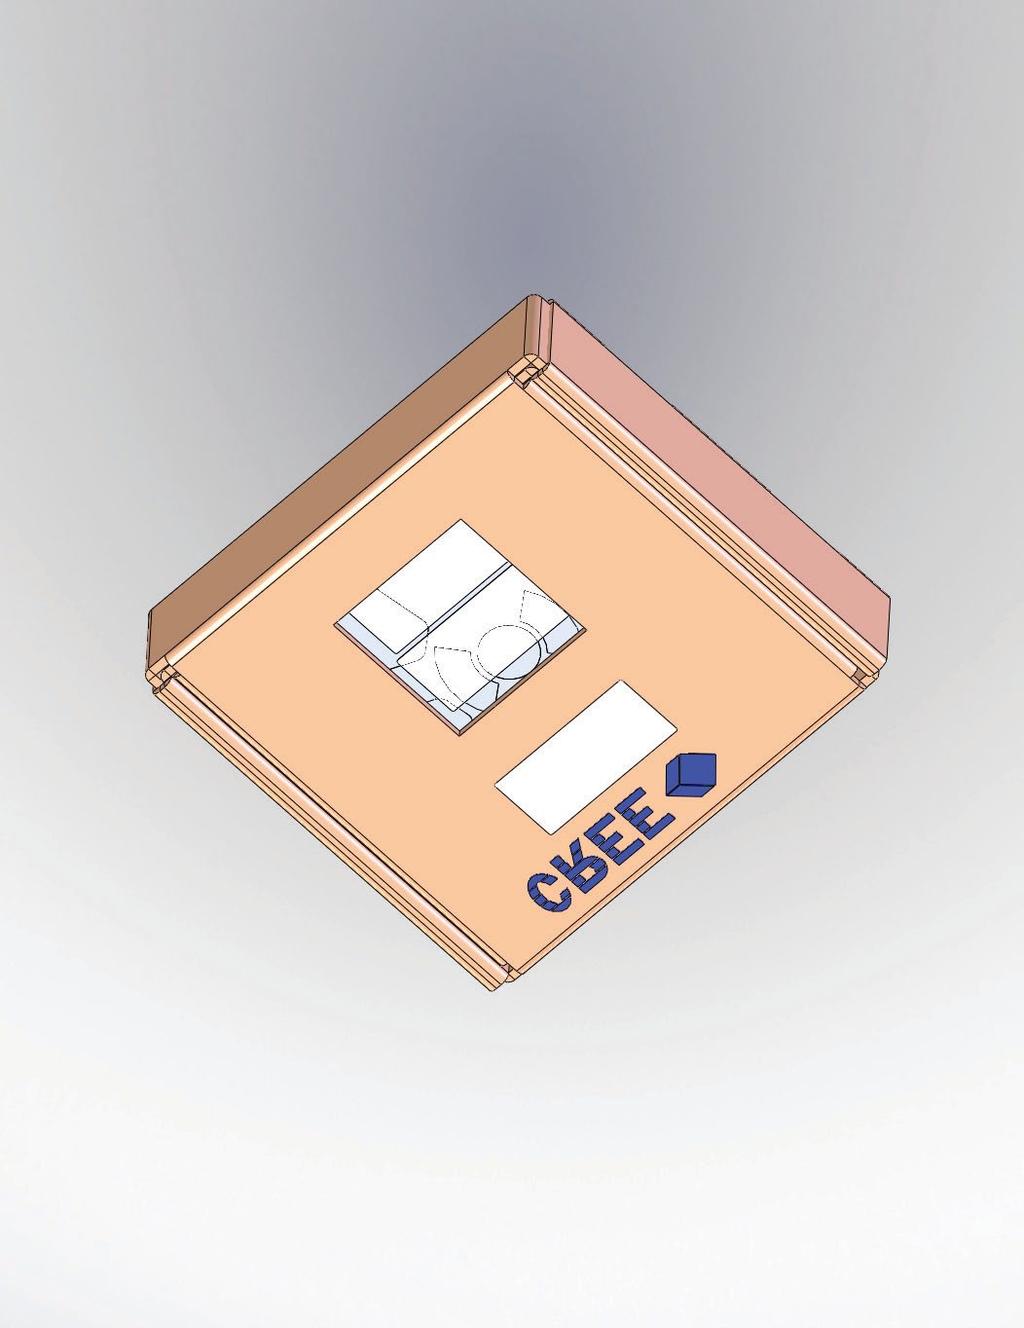 Unpackaged Reel Packaged Reel Label with Cree Bin Code, Qty, Reel ID Dessicant (inside bag) Humidity Indicator Card (inside bag) Label with Cree Order Code, Qty, Reel ID, PO # Label with Cree Bin